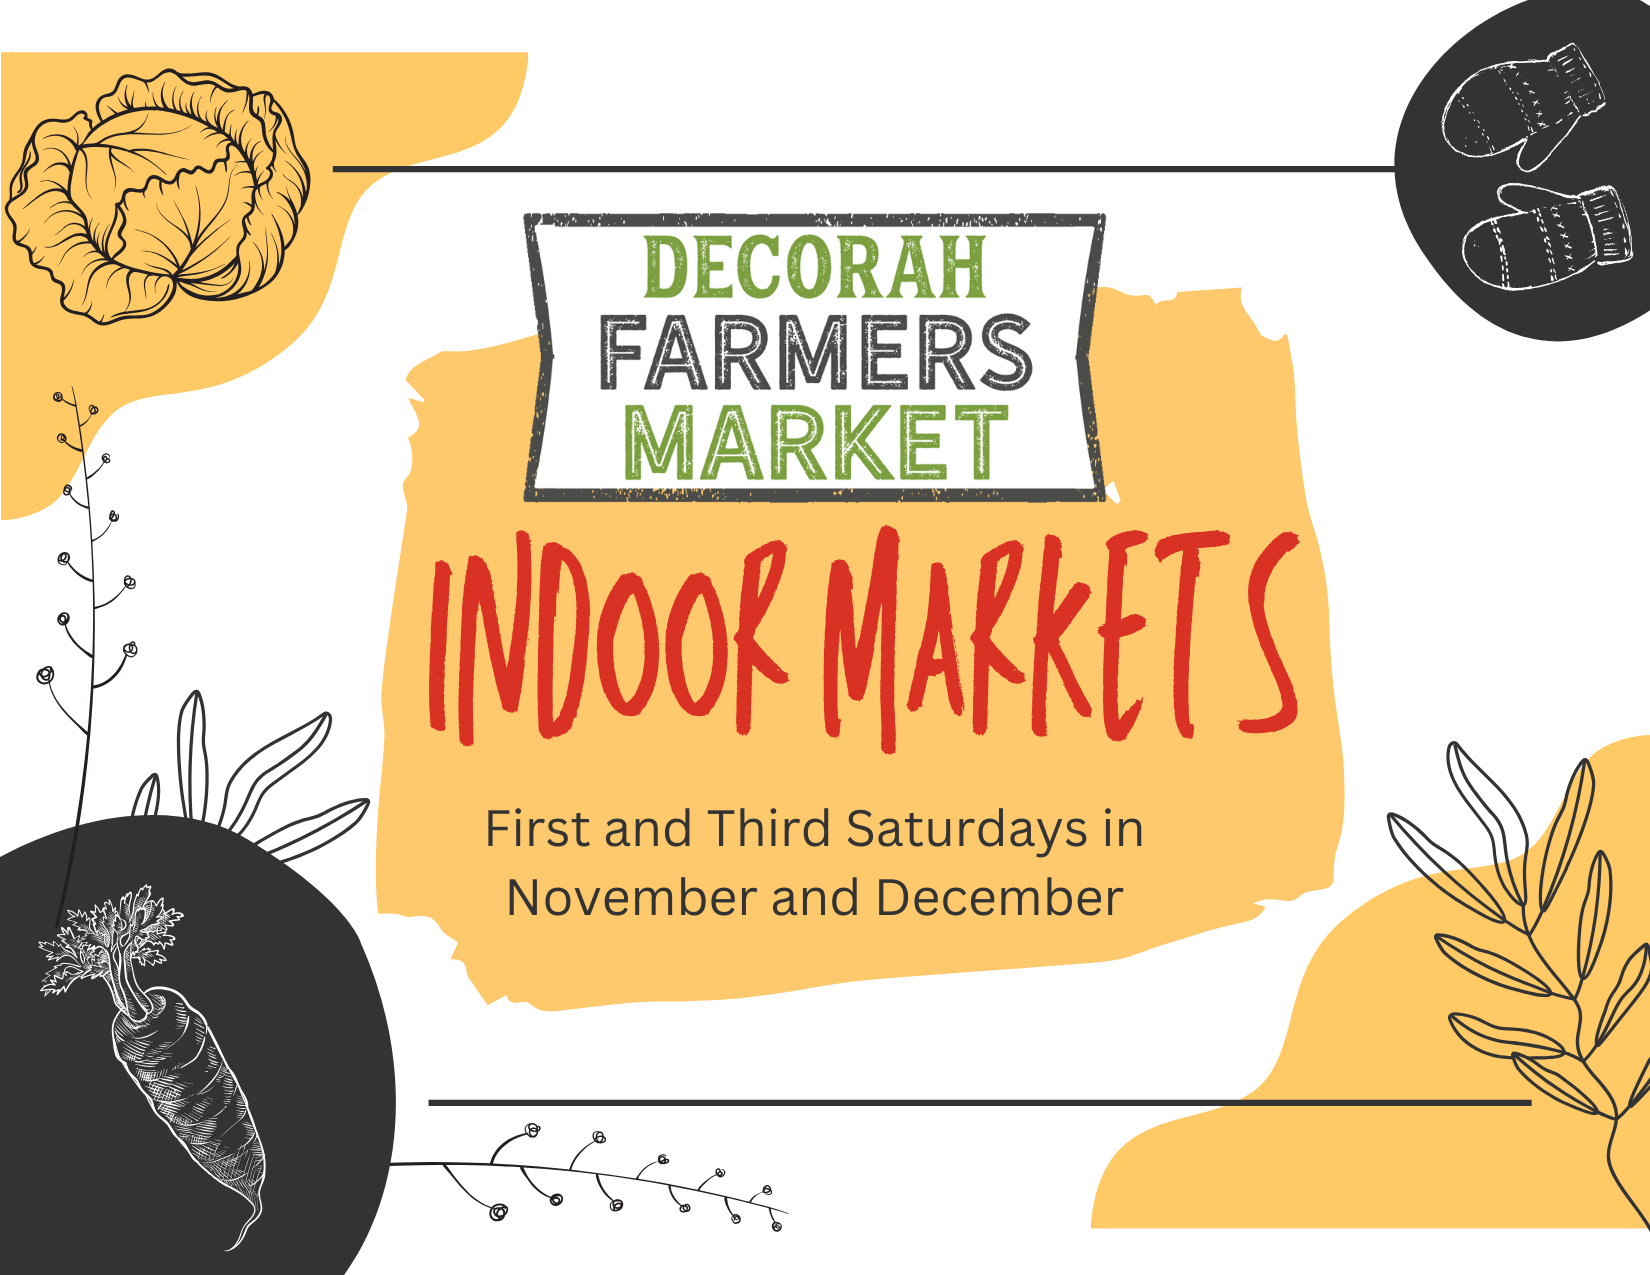 Decorah Farmers Market: Indoor Market - Shop Local This Holiday Season! thumbnail